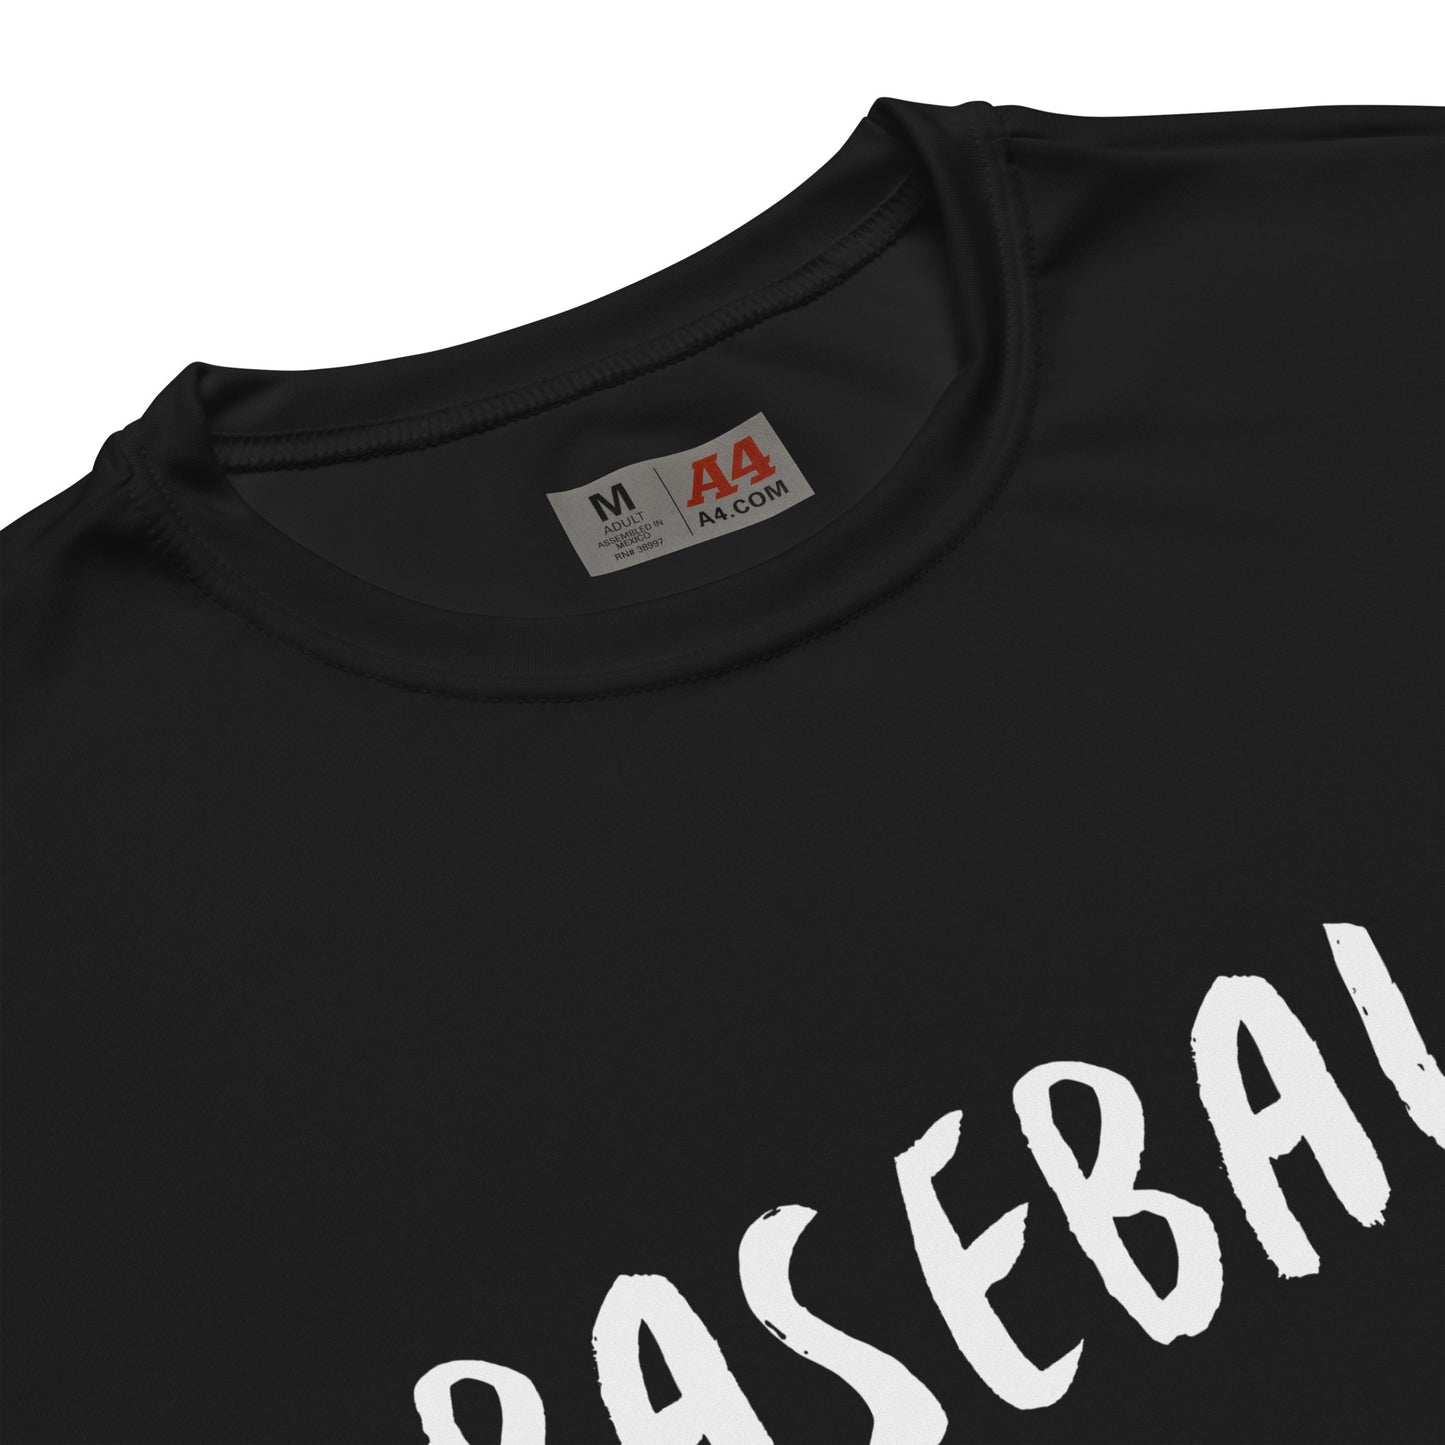 Unisex performance crew neck t-shirt - Baseball